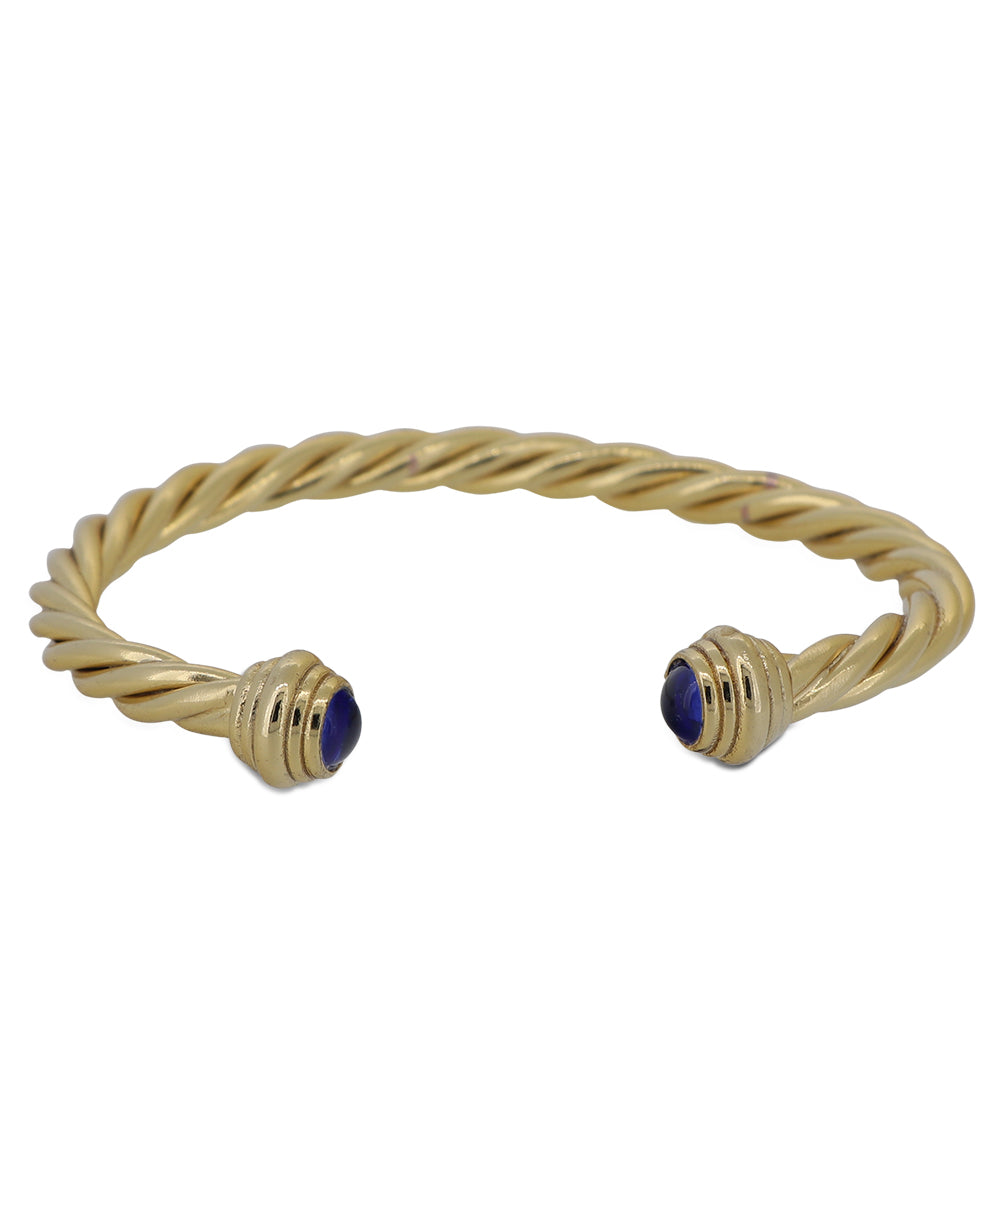 Artistic Adjustable Gold-Plated Brass Wire Bracelet